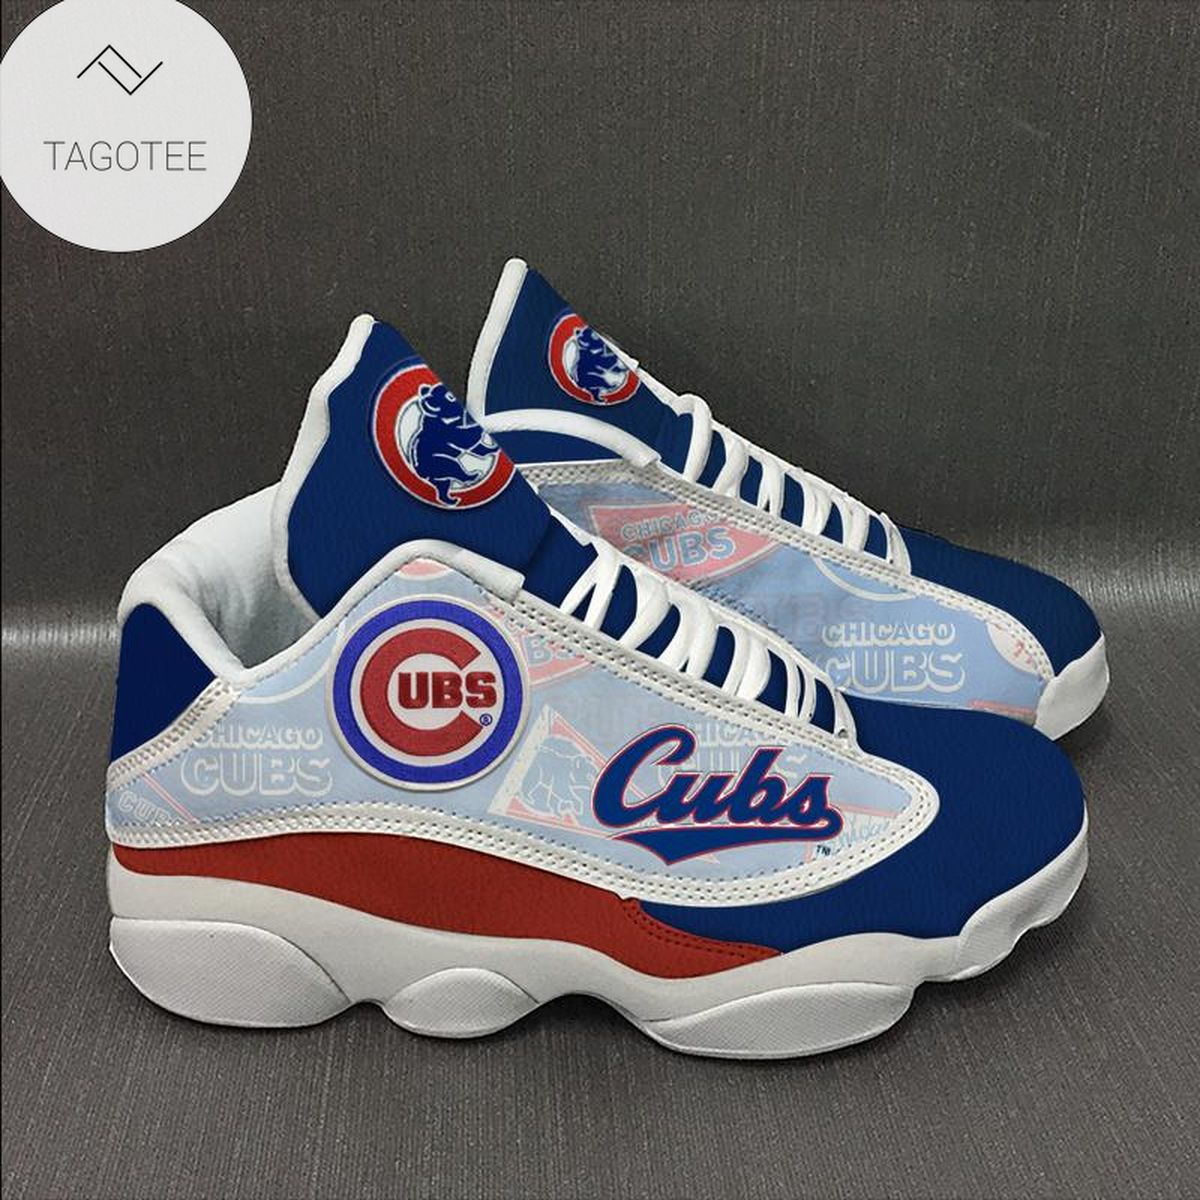 Chicago Cubs Sneakers Air Jordan 13 Shoes